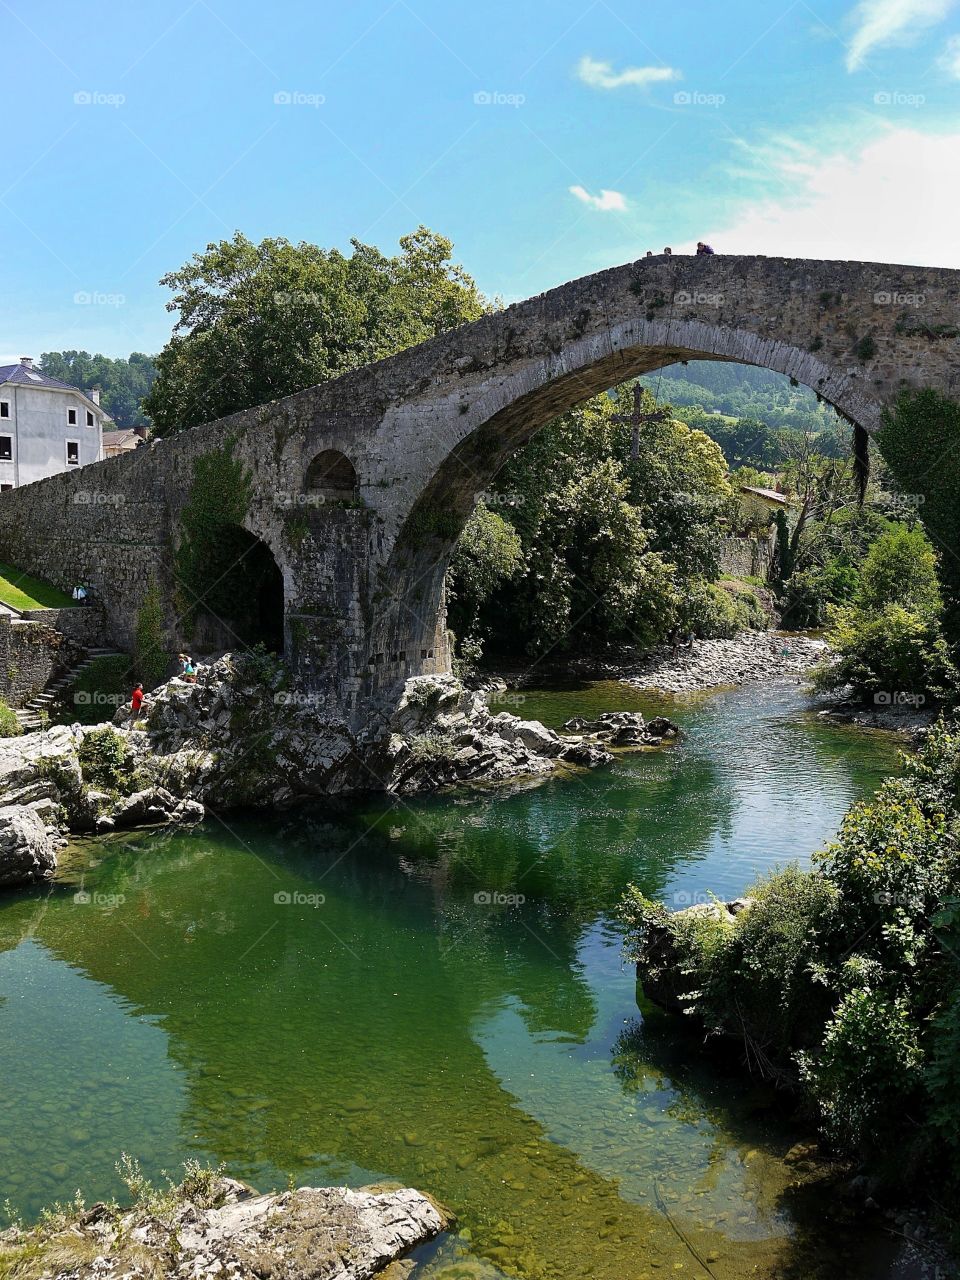 Roman Arch Bridge - Puente Romano - Cangas de Onís - Asturias - Spain